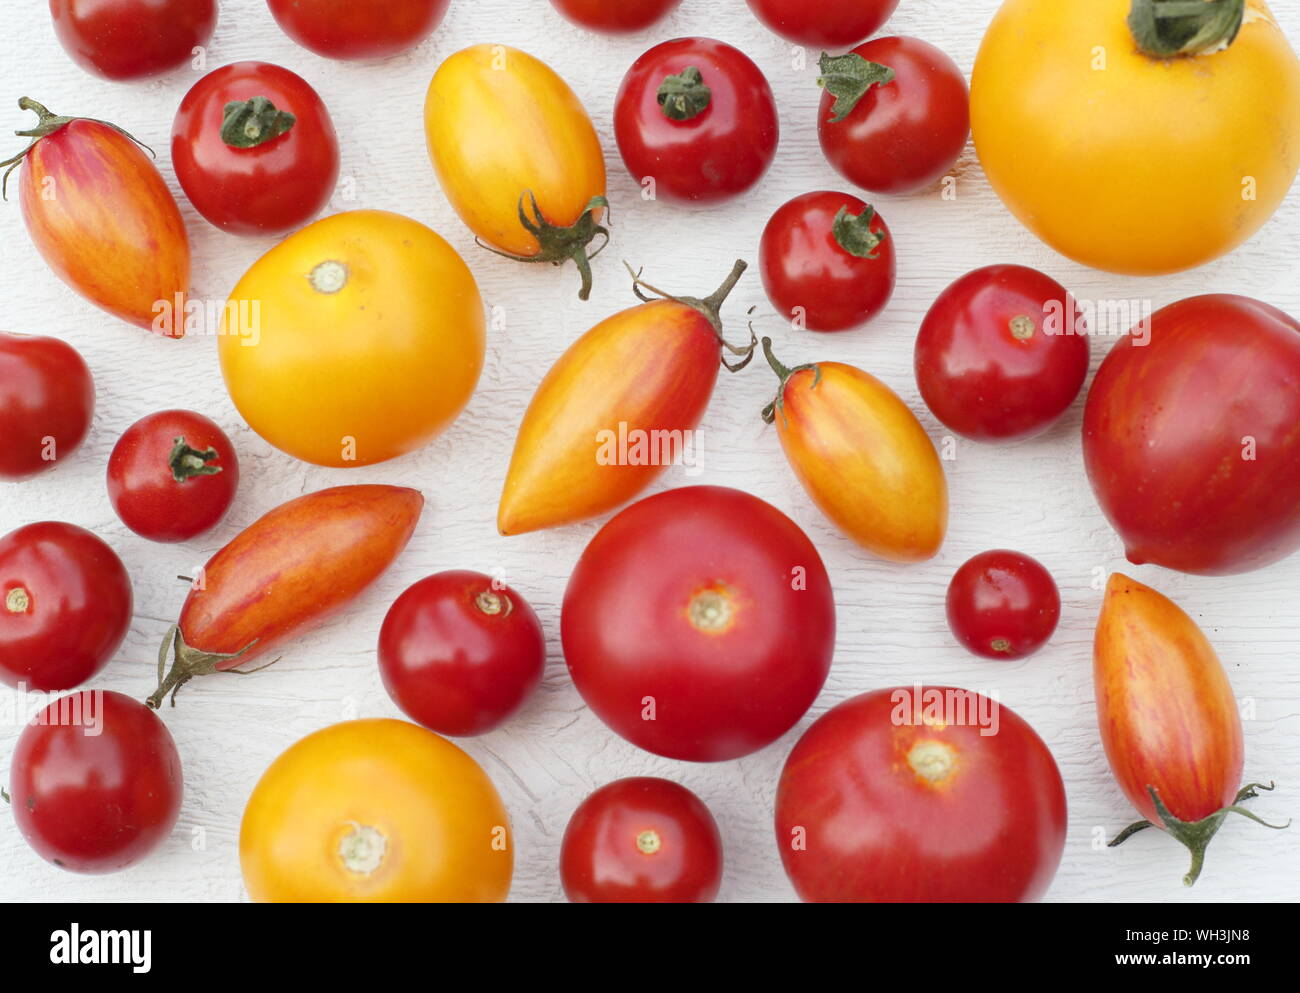 Solanum lycopersicum. Varieties of homegrown tomatoes including Golden sunrise, Sweet Million, Tumbling Tom, on white background Stock Photo